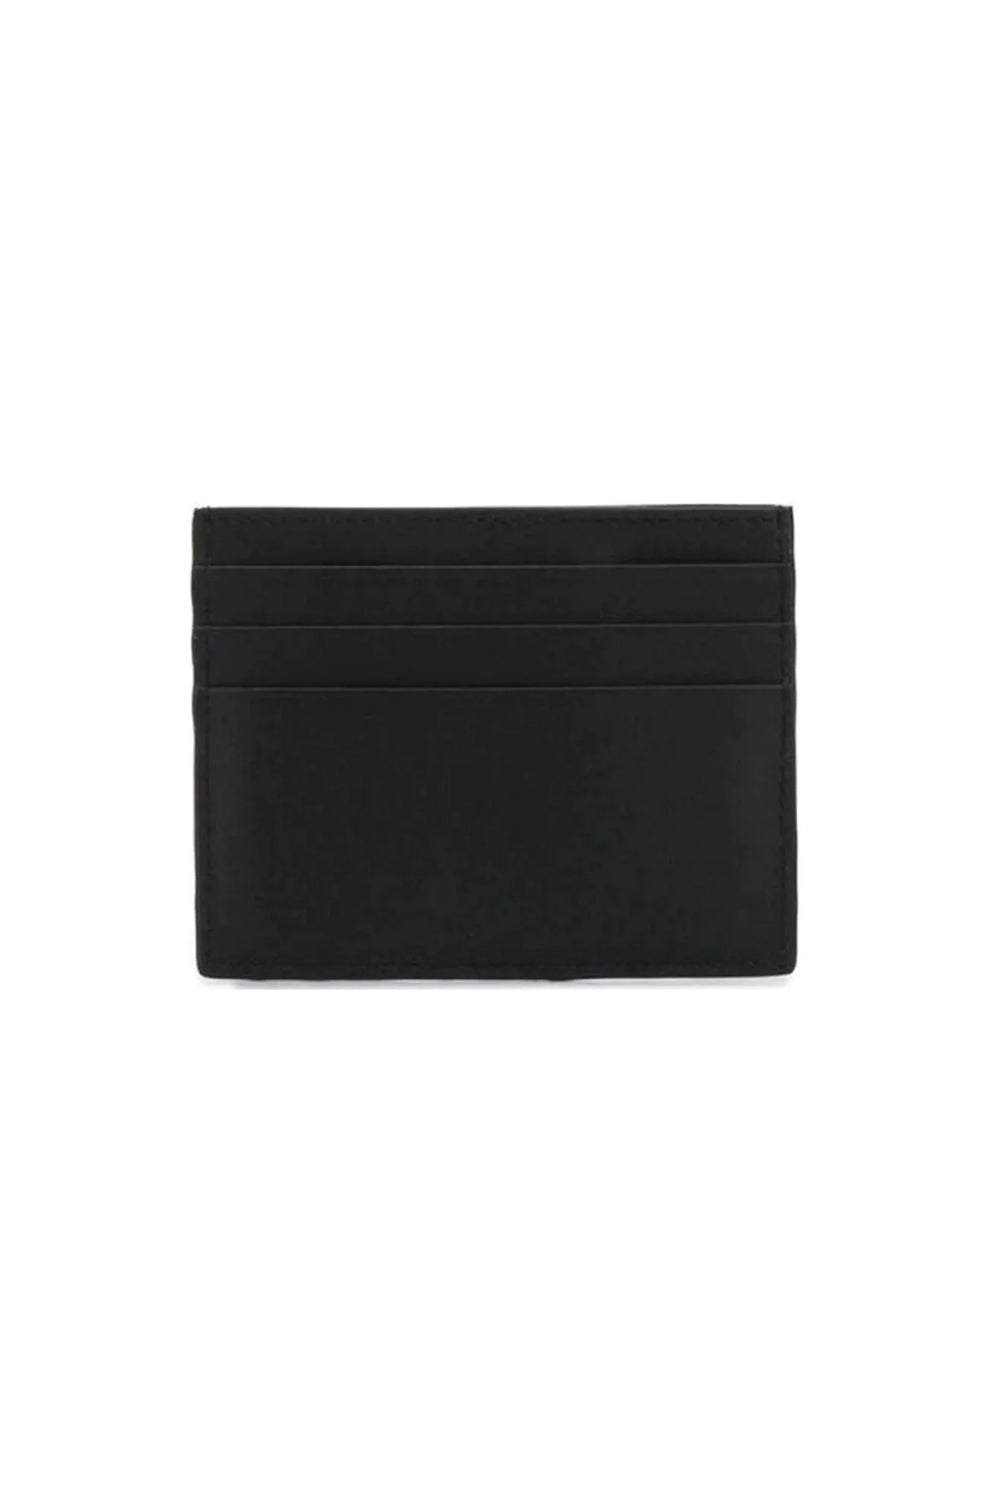 Fendi Corner Bugs Gold Black Calf Leather Card Case